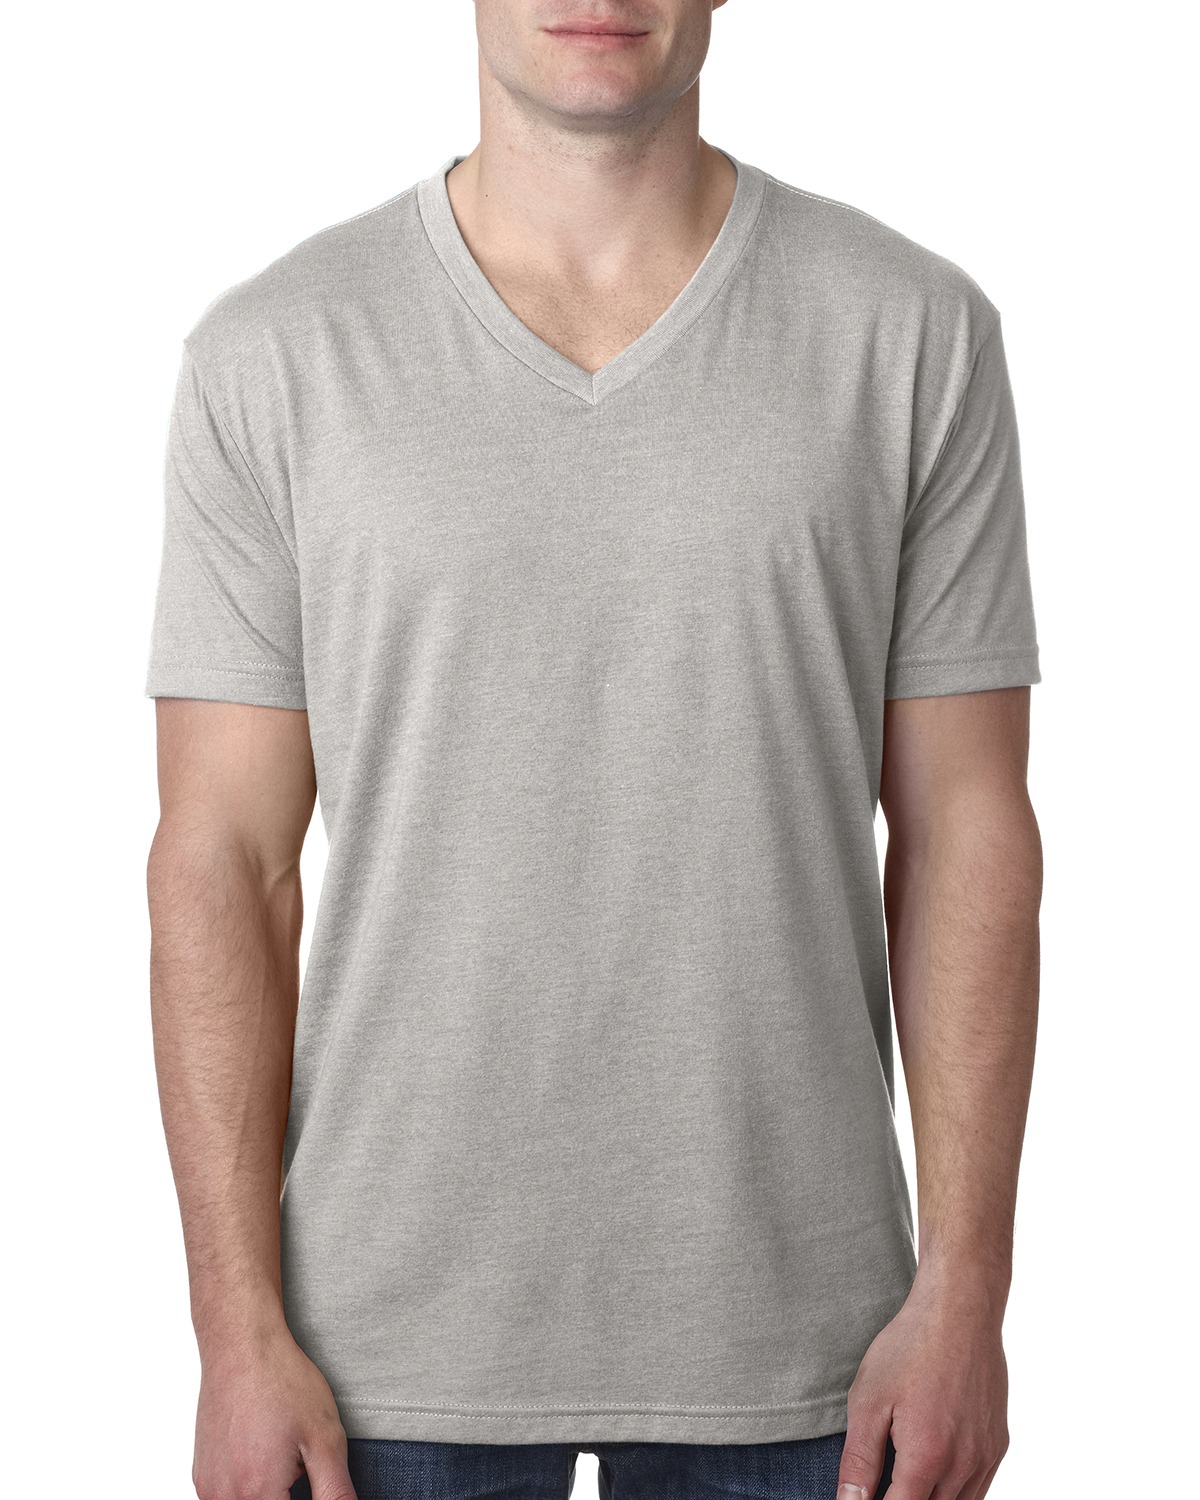 XiaoShop Men Short Sleeve 5-Pack O-Neck 100% Cotton Classic T-Shirt Tops 